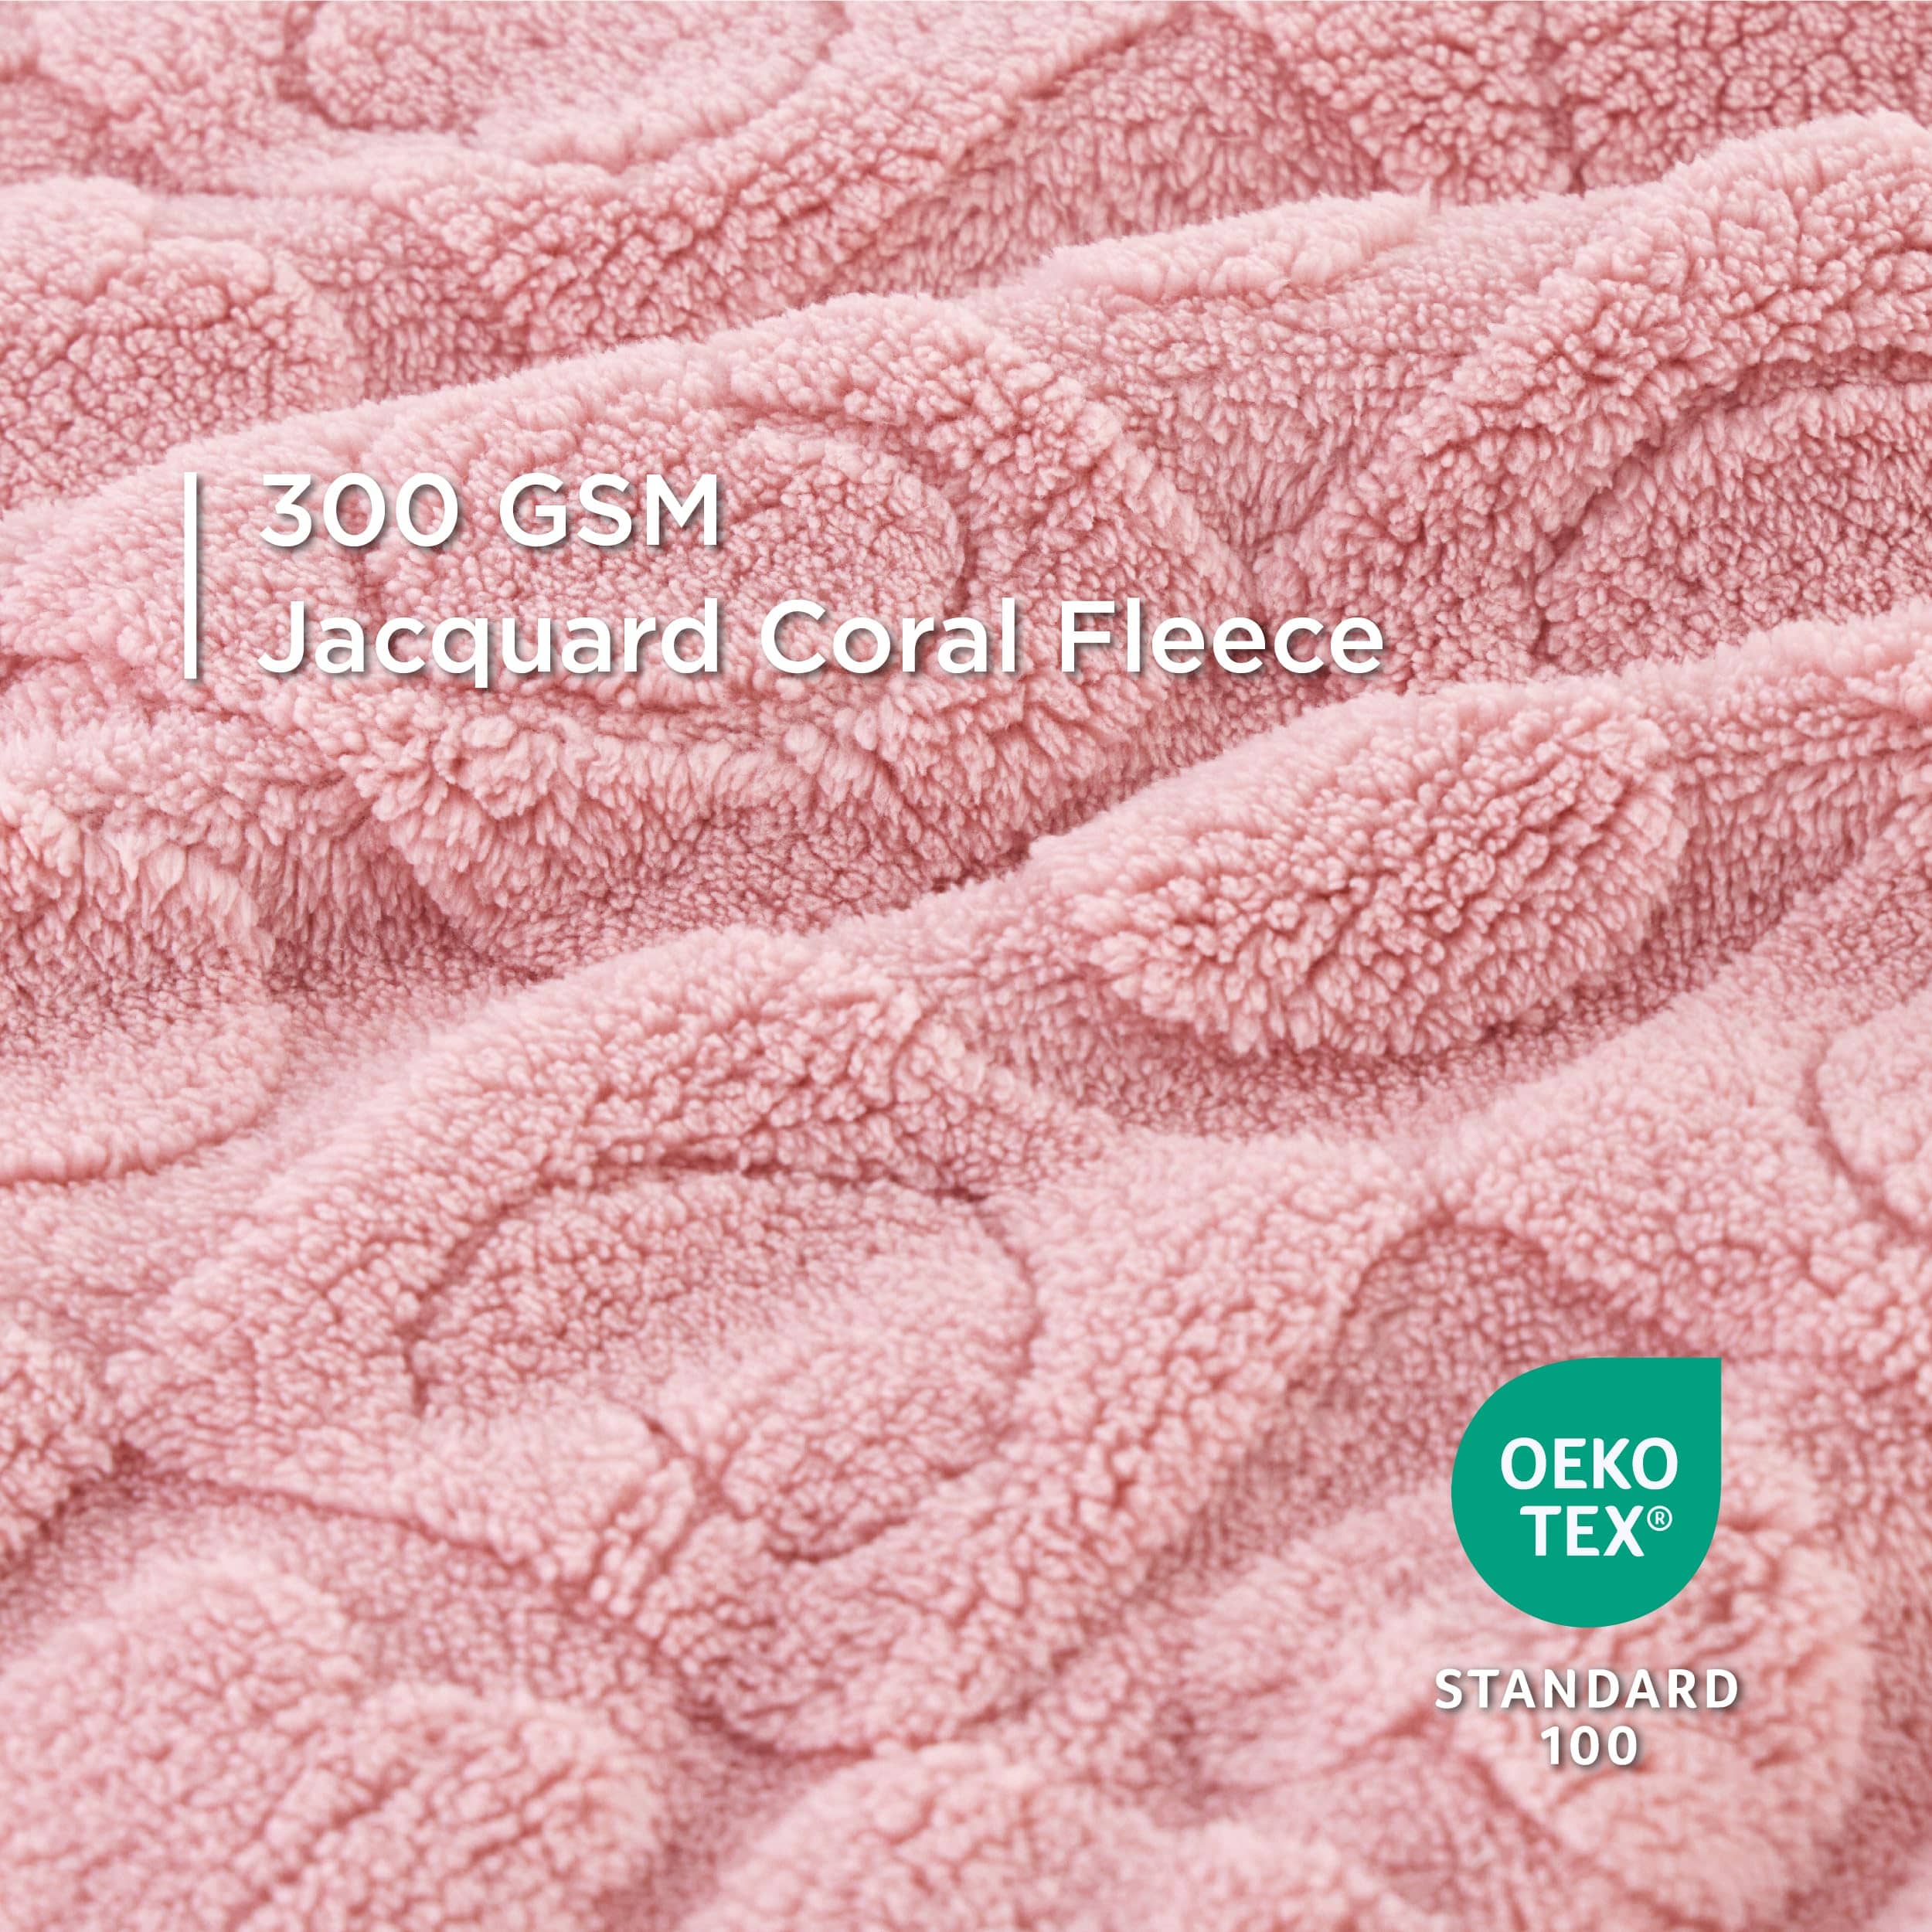 Jacquard Fleece Pet Blanket